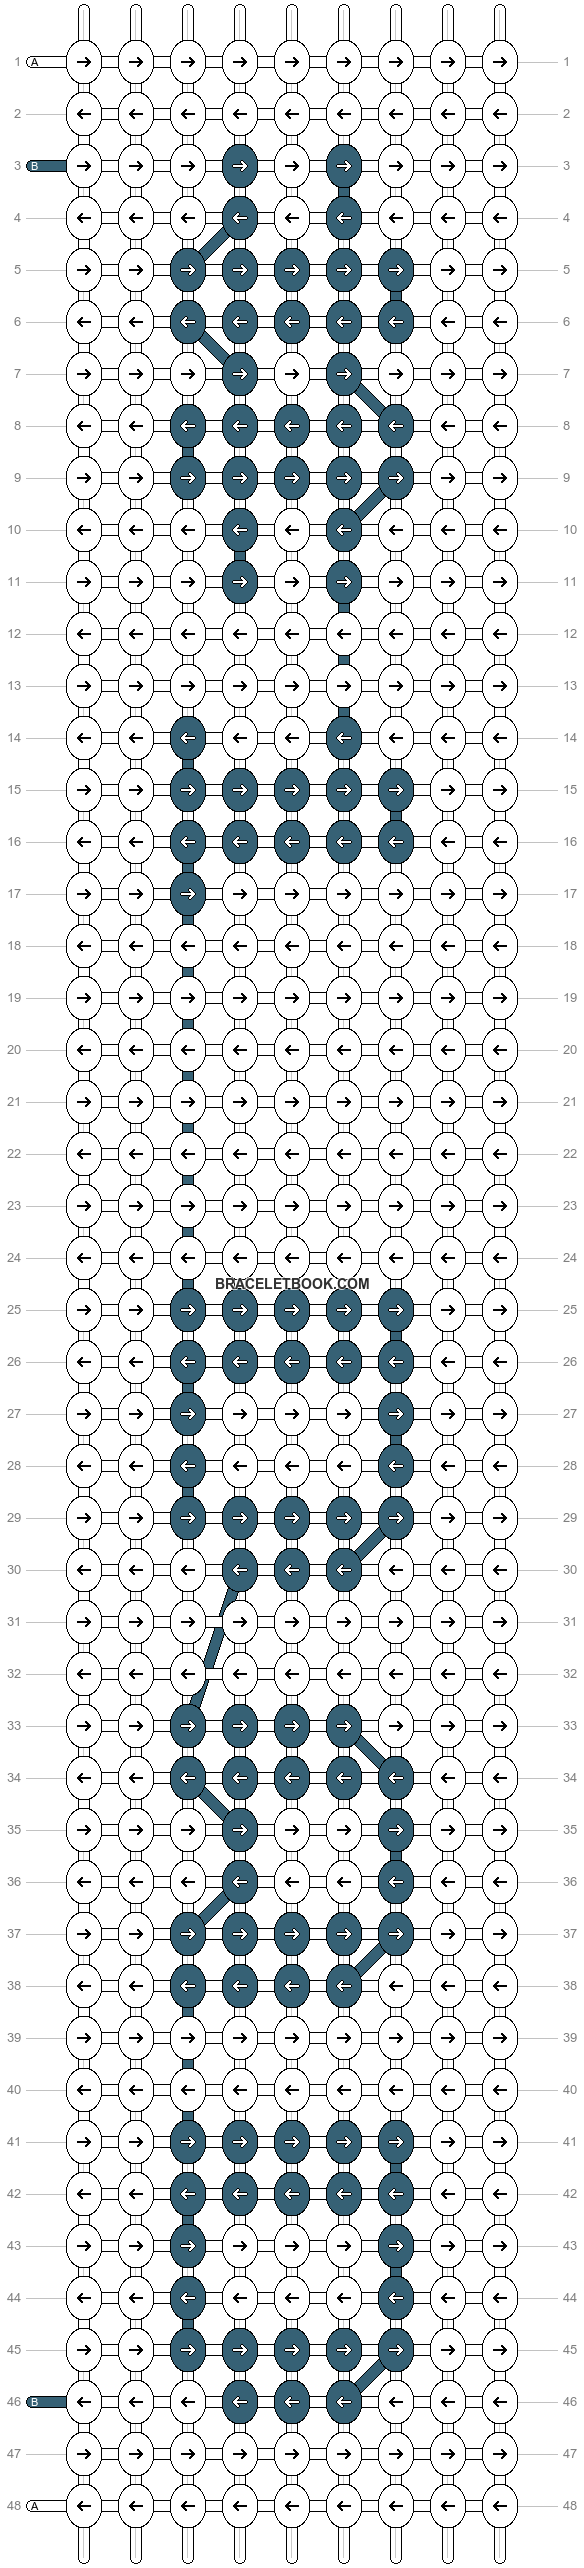 Alpha pattern #6053 variation #15682 pattern